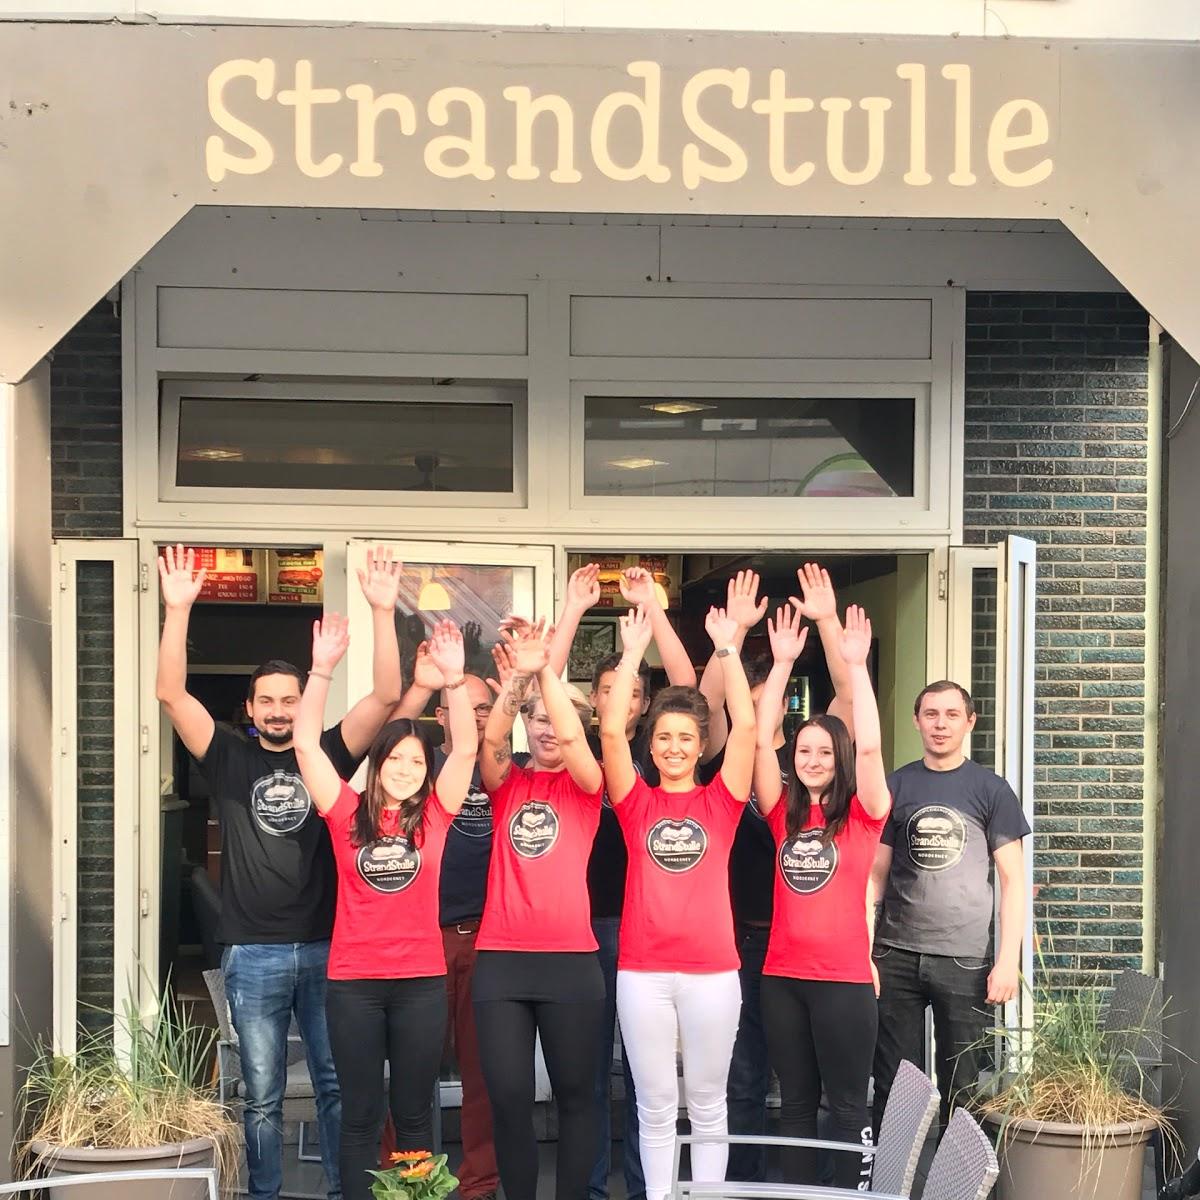 Restaurant "StrandStulle" in Norderney